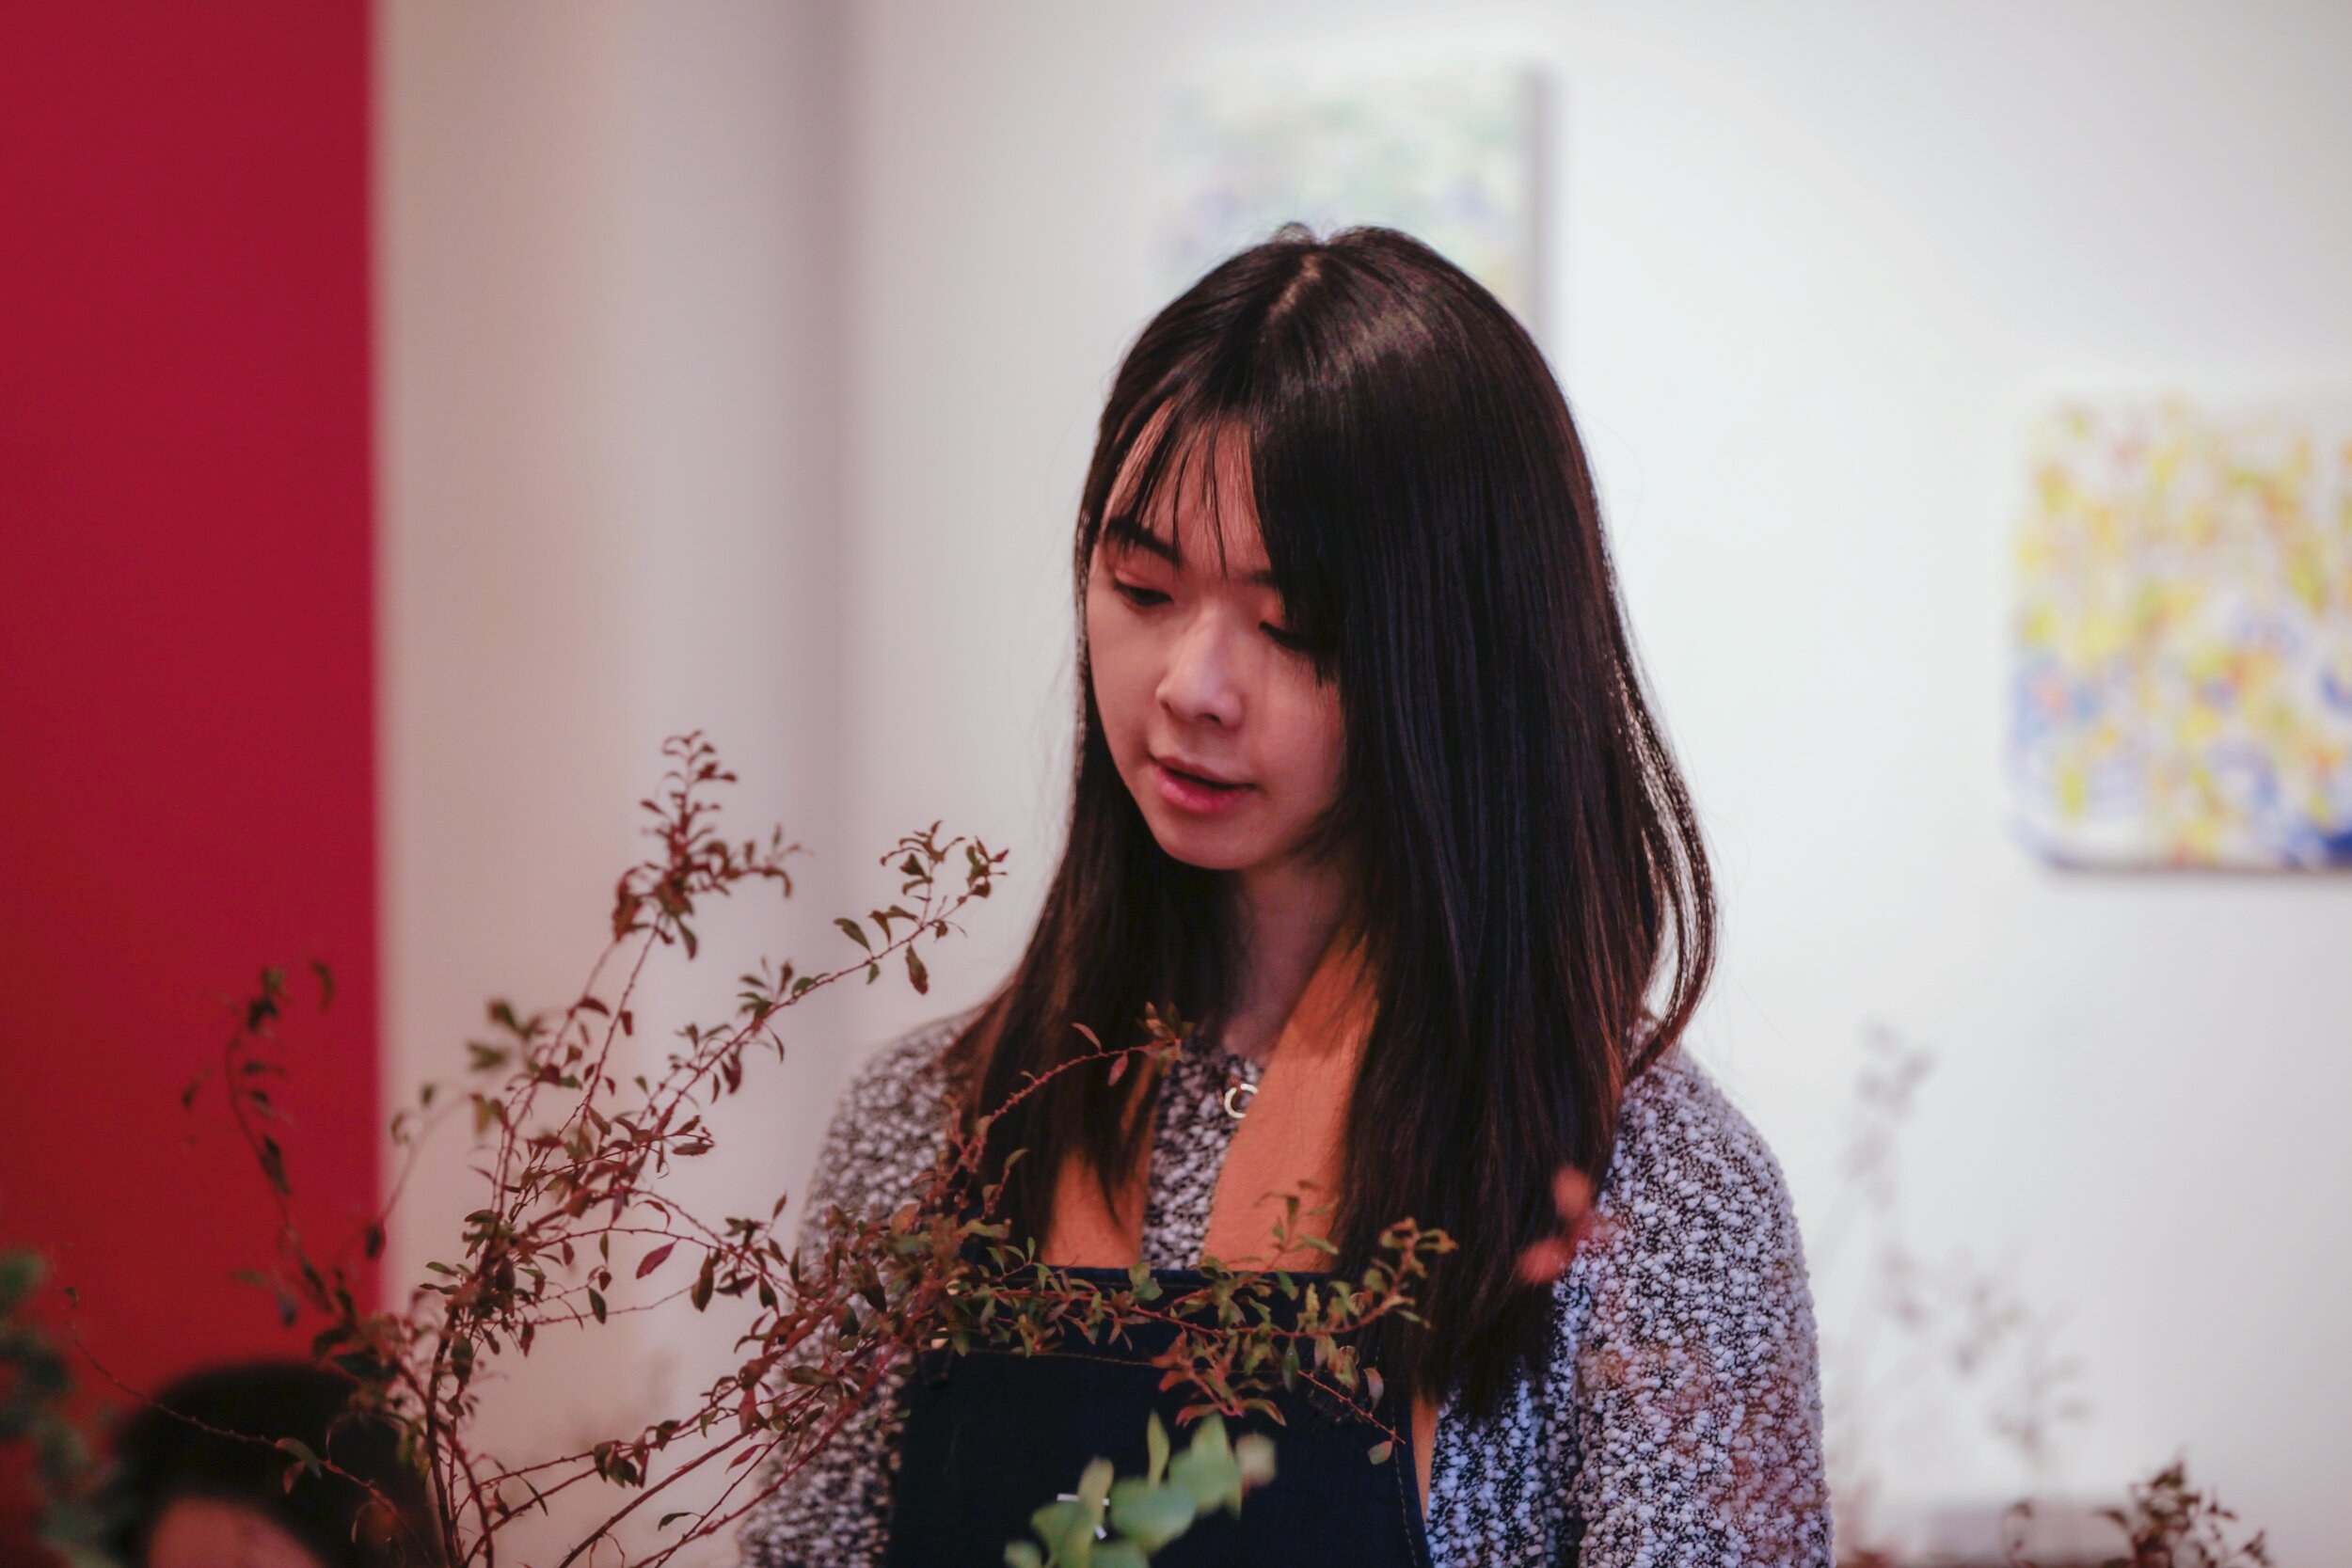   A Taste of Ikebana  at Fou Gallery (11.9.2019), photo by Jingxin Hu, courtesy Fou Gallery. 